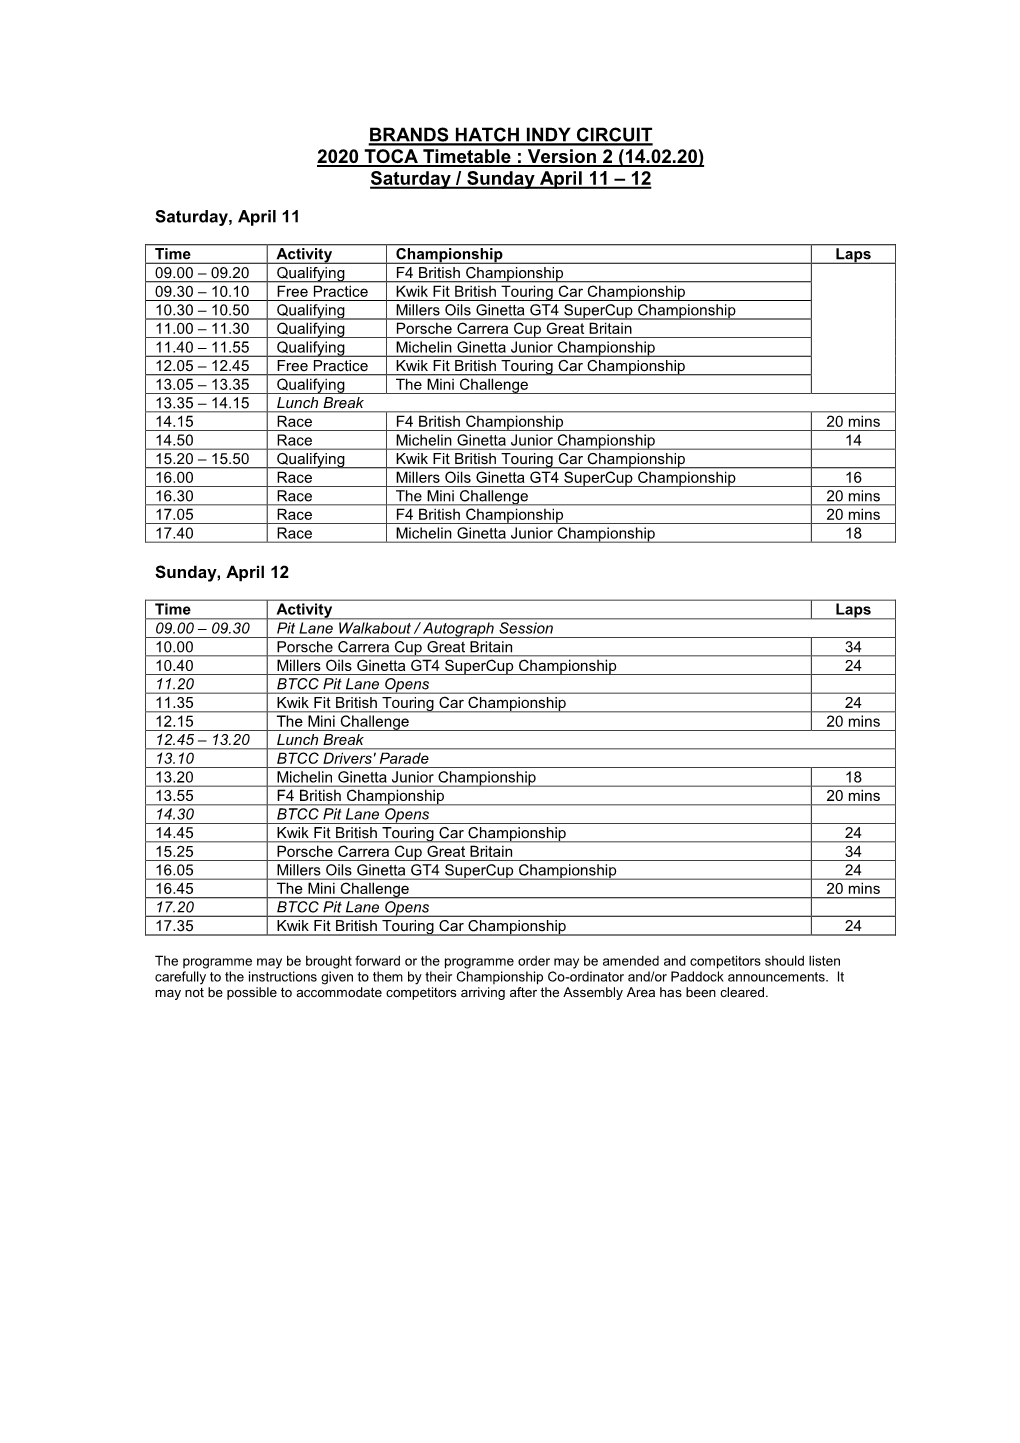 BRANDS HATCH INDY CIRCUIT 2020 TOCA Timetable : Version 2 (14.02.20) Saturday / Sunday April 11 – 12